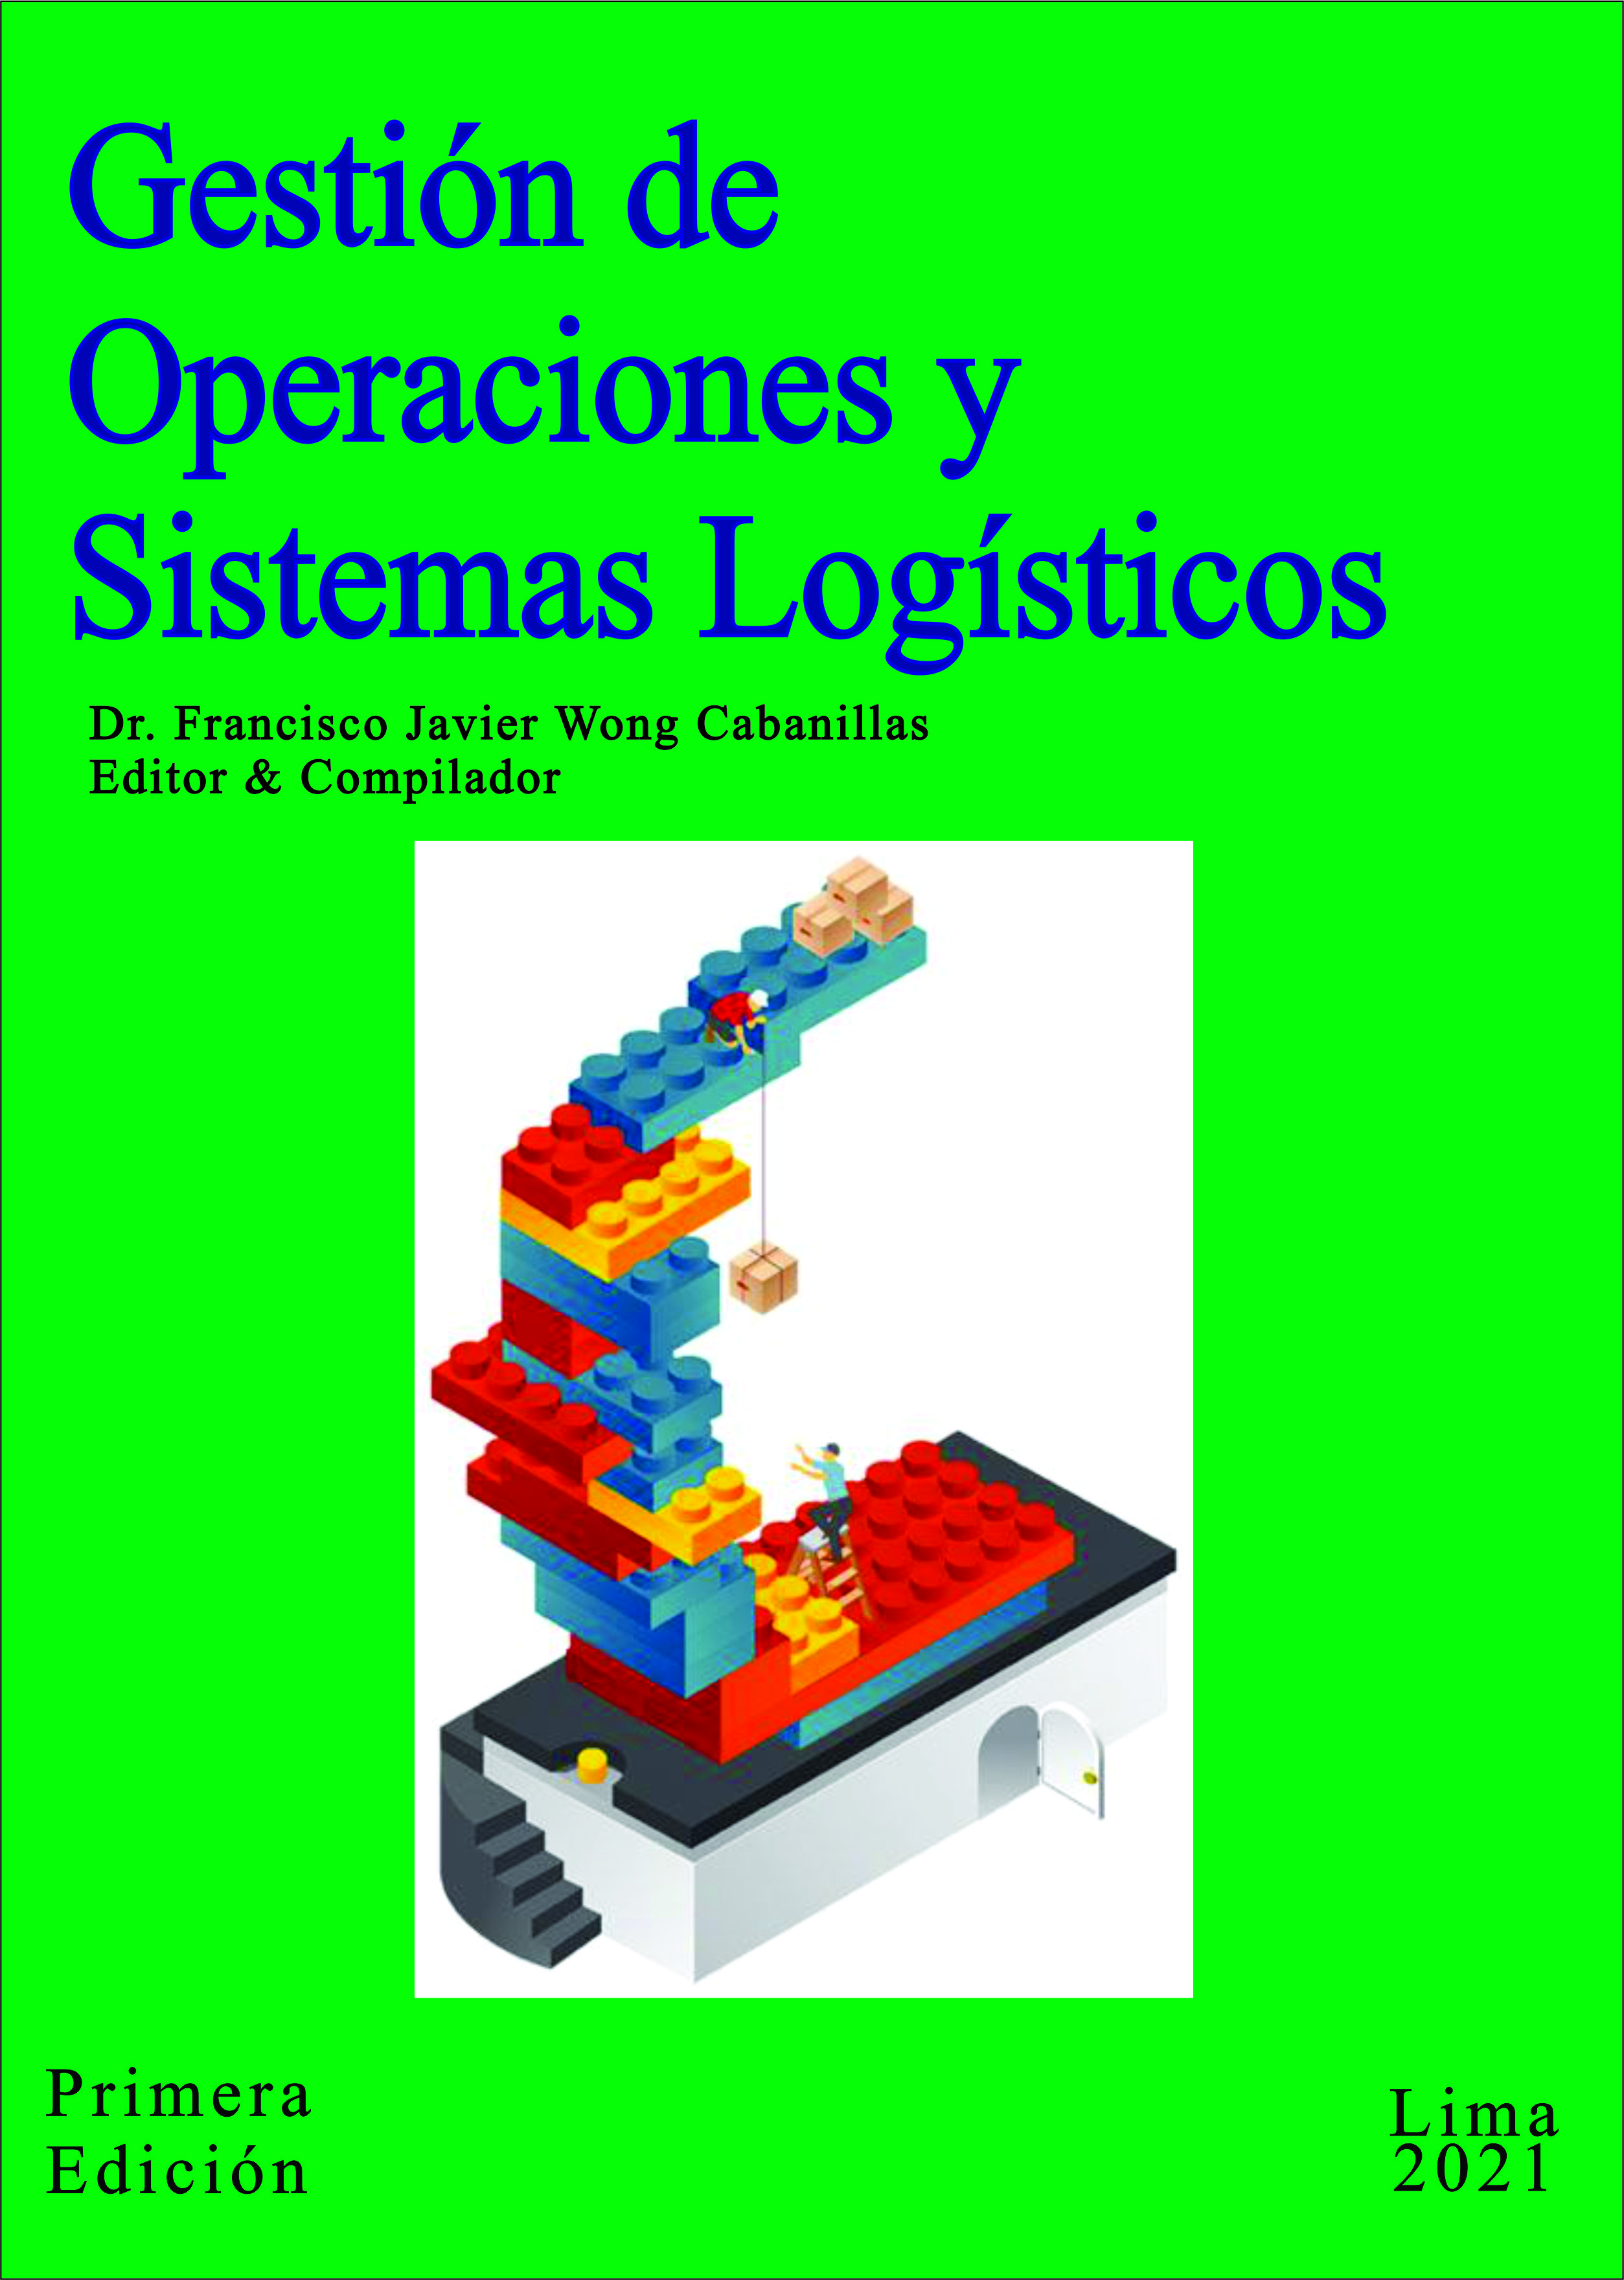 modelo_caratula_de_sistemas_operativos1.jpg